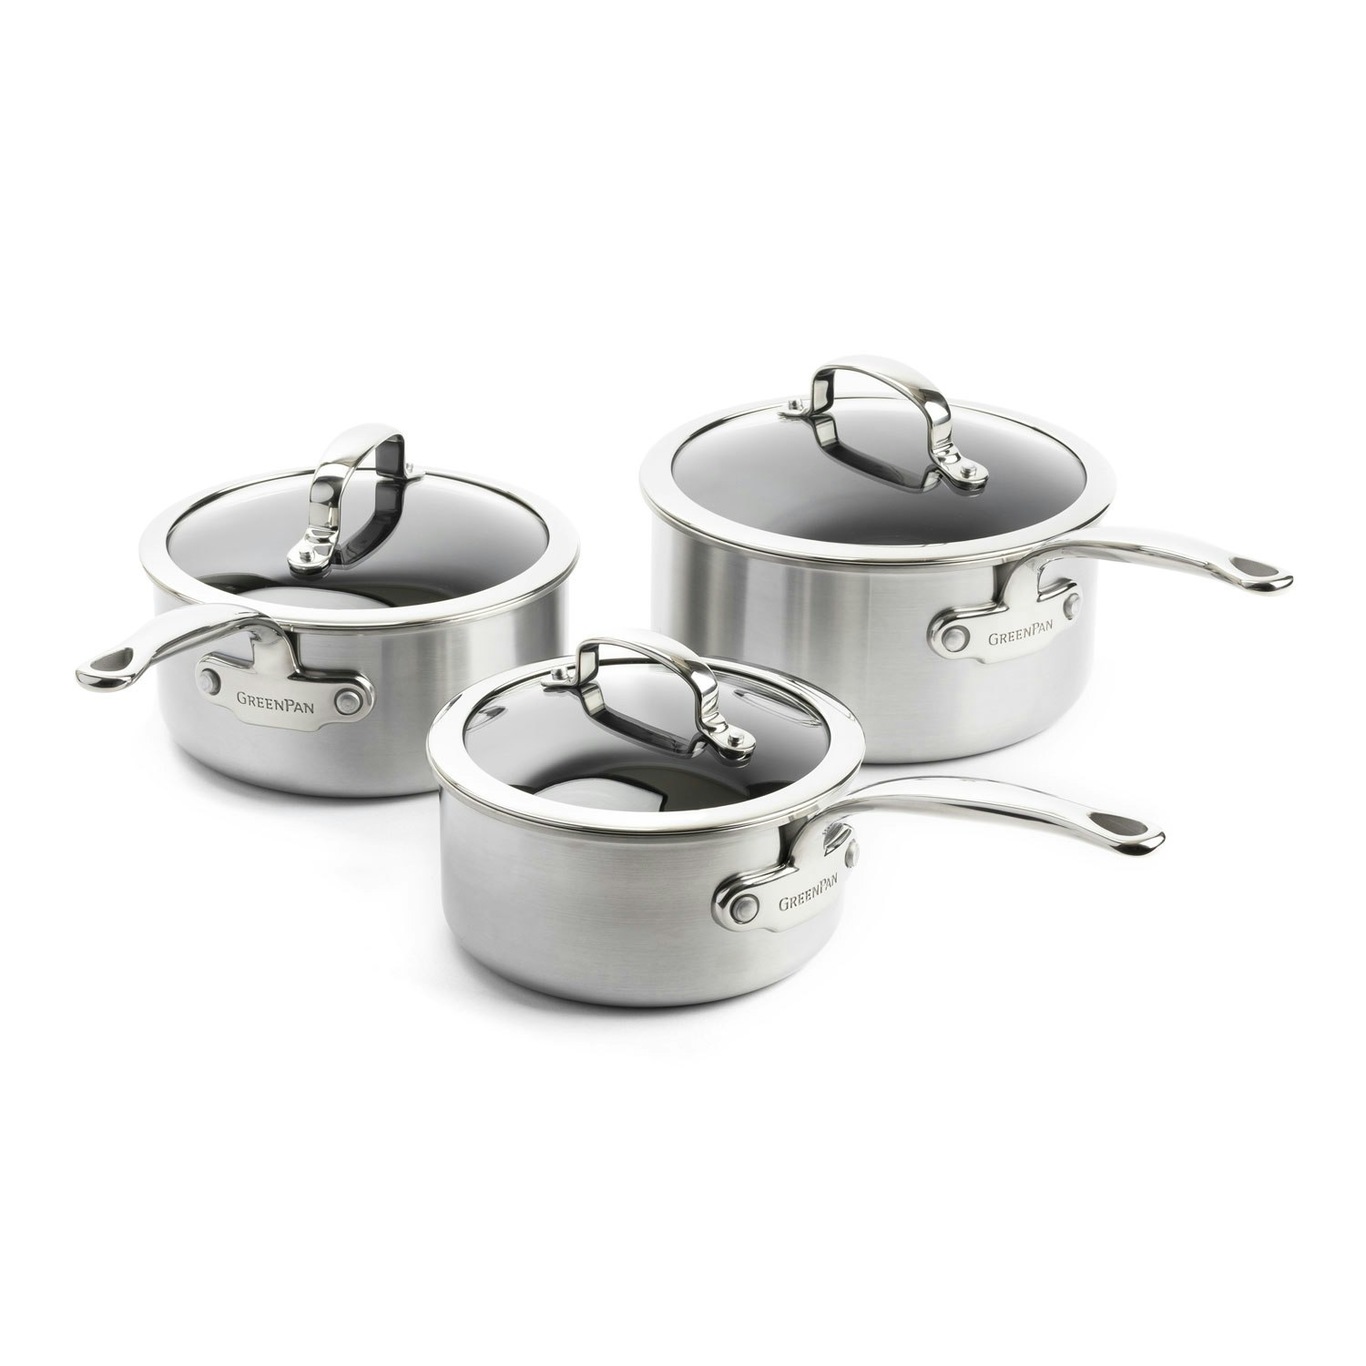 https://royaldesign.com/image/2/greenpan-premiere-saucepan-set-3-pieces-0?w=800&quality=80